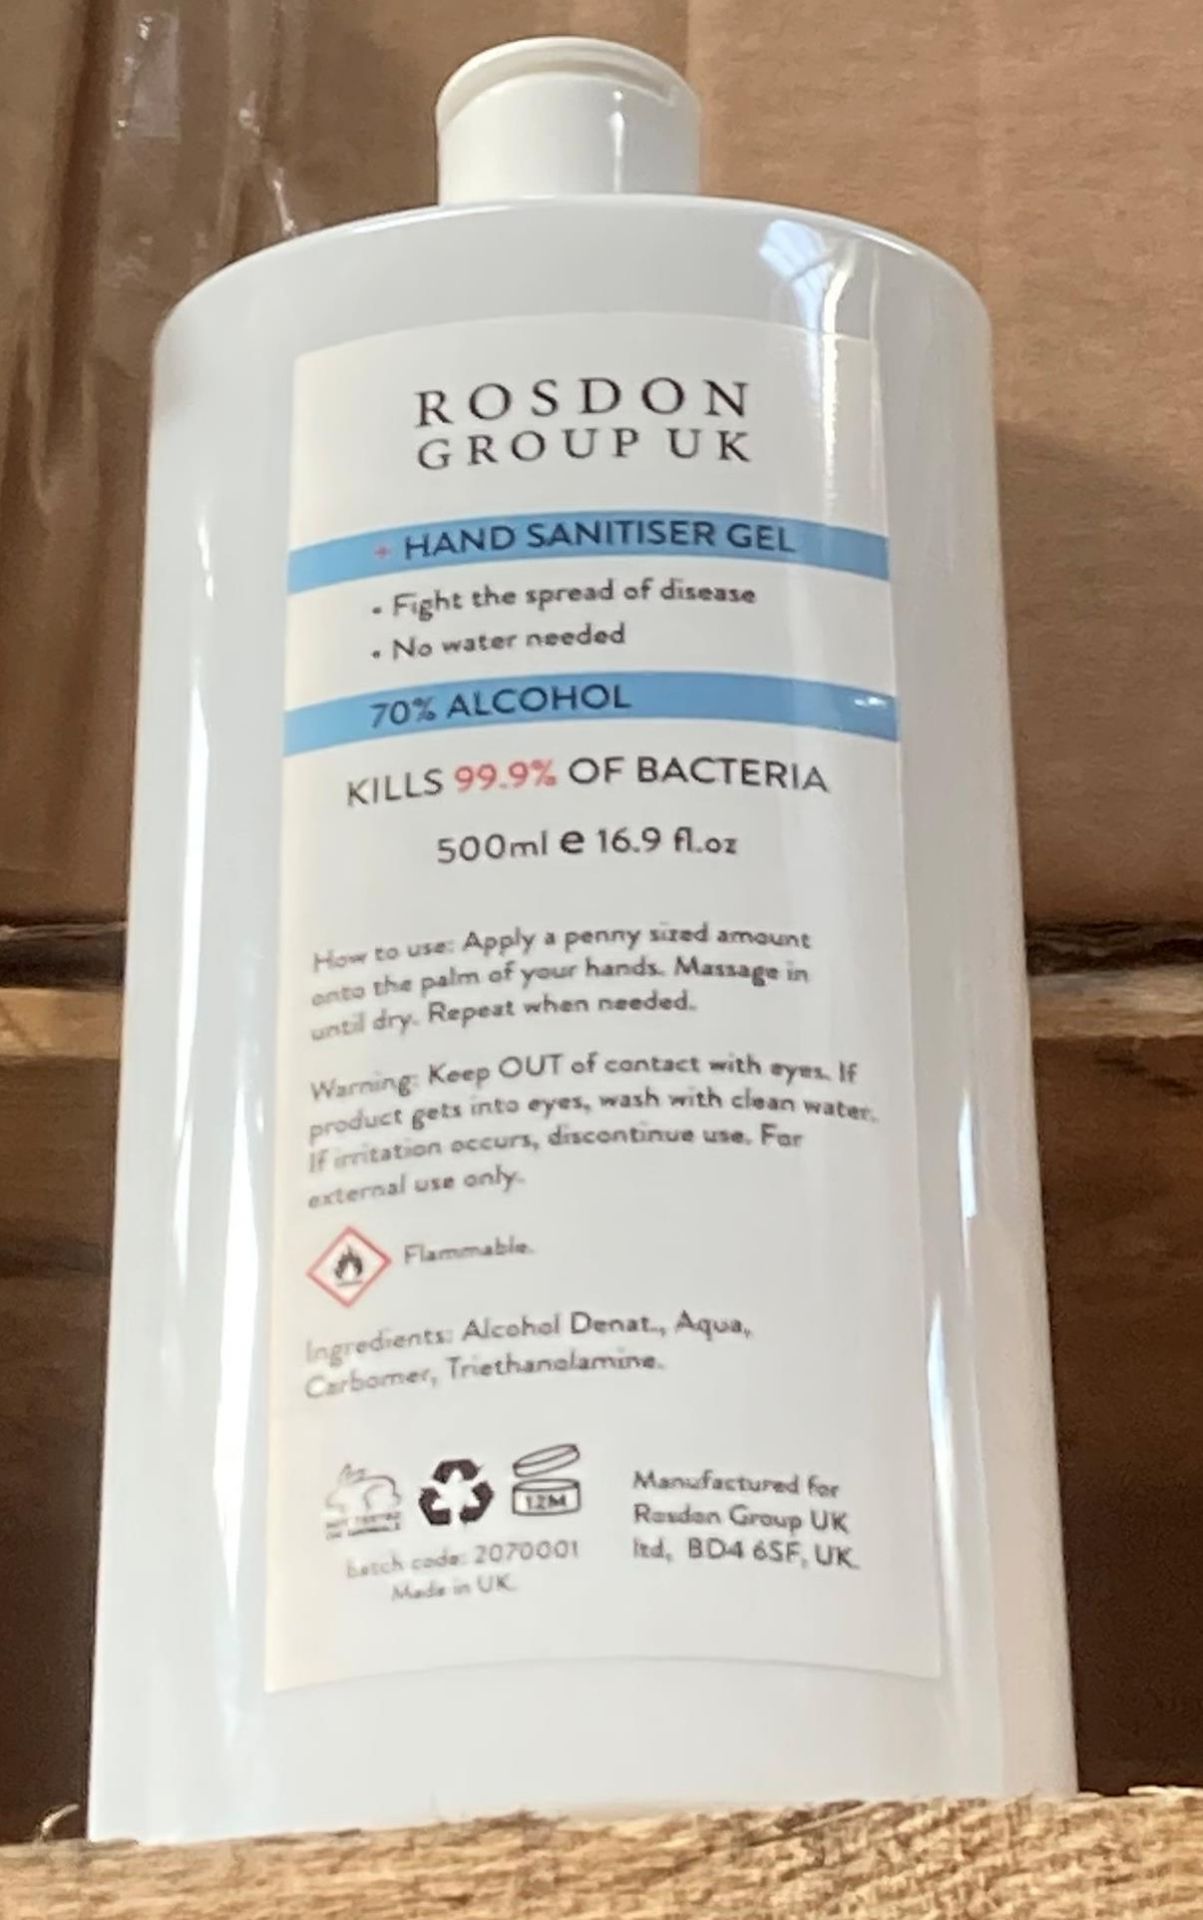 Two boxes of Rosdon Group hand sanitiser gel 500ml (36 units per box)